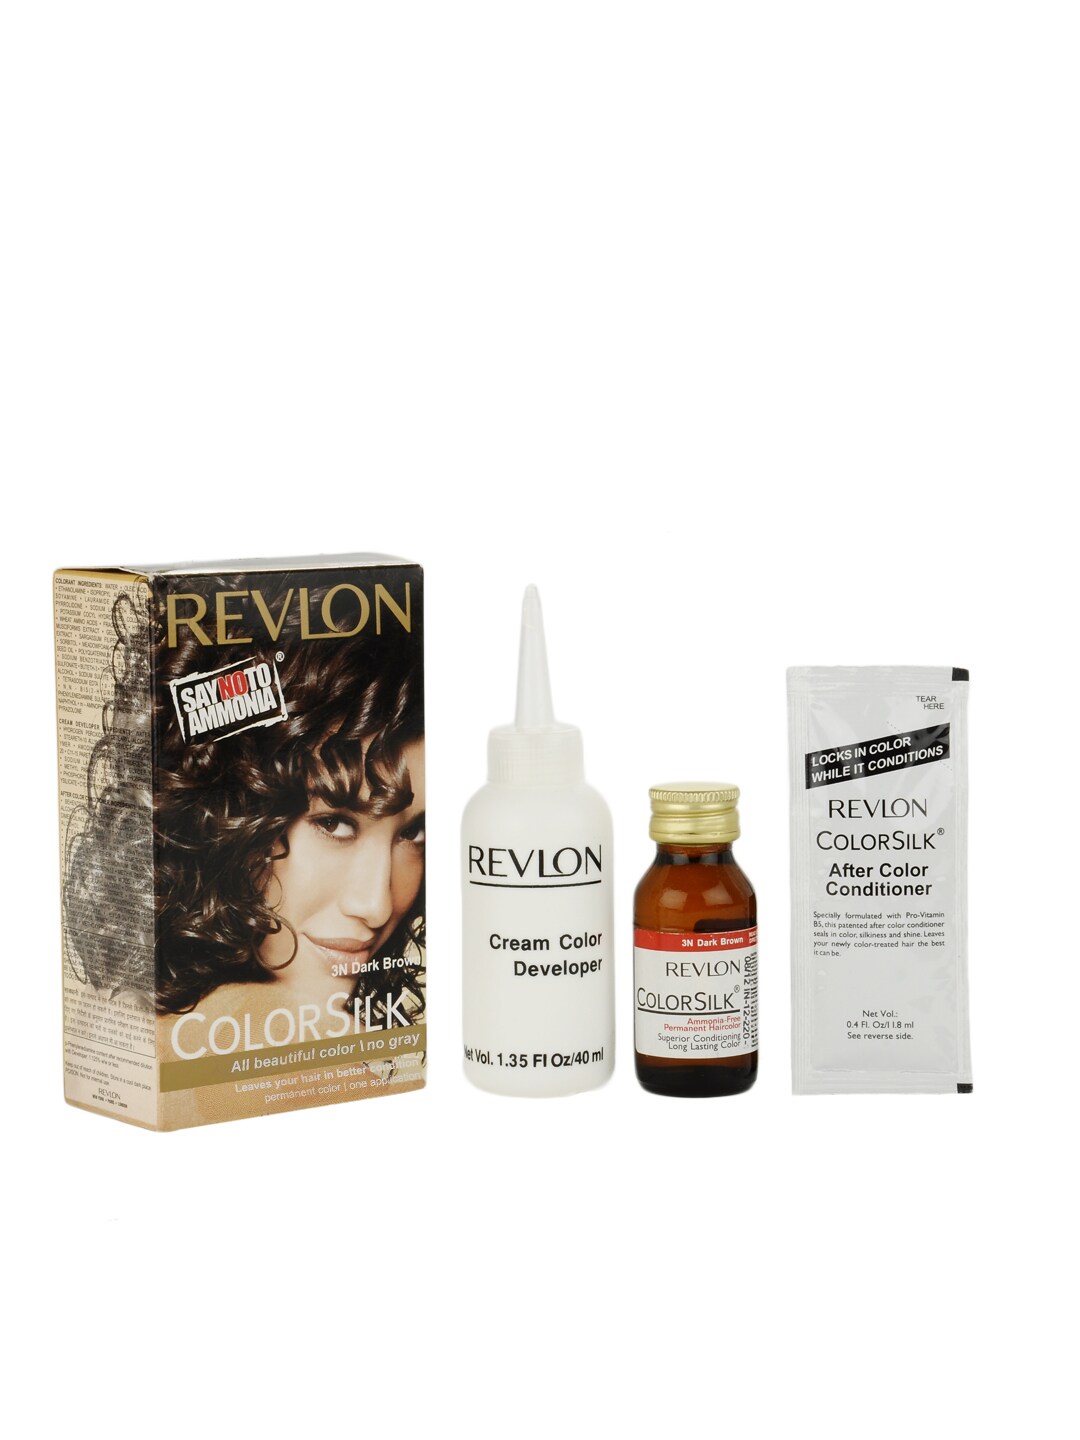 Revlon Colorsilk 3N Dark Brown Hair Colour